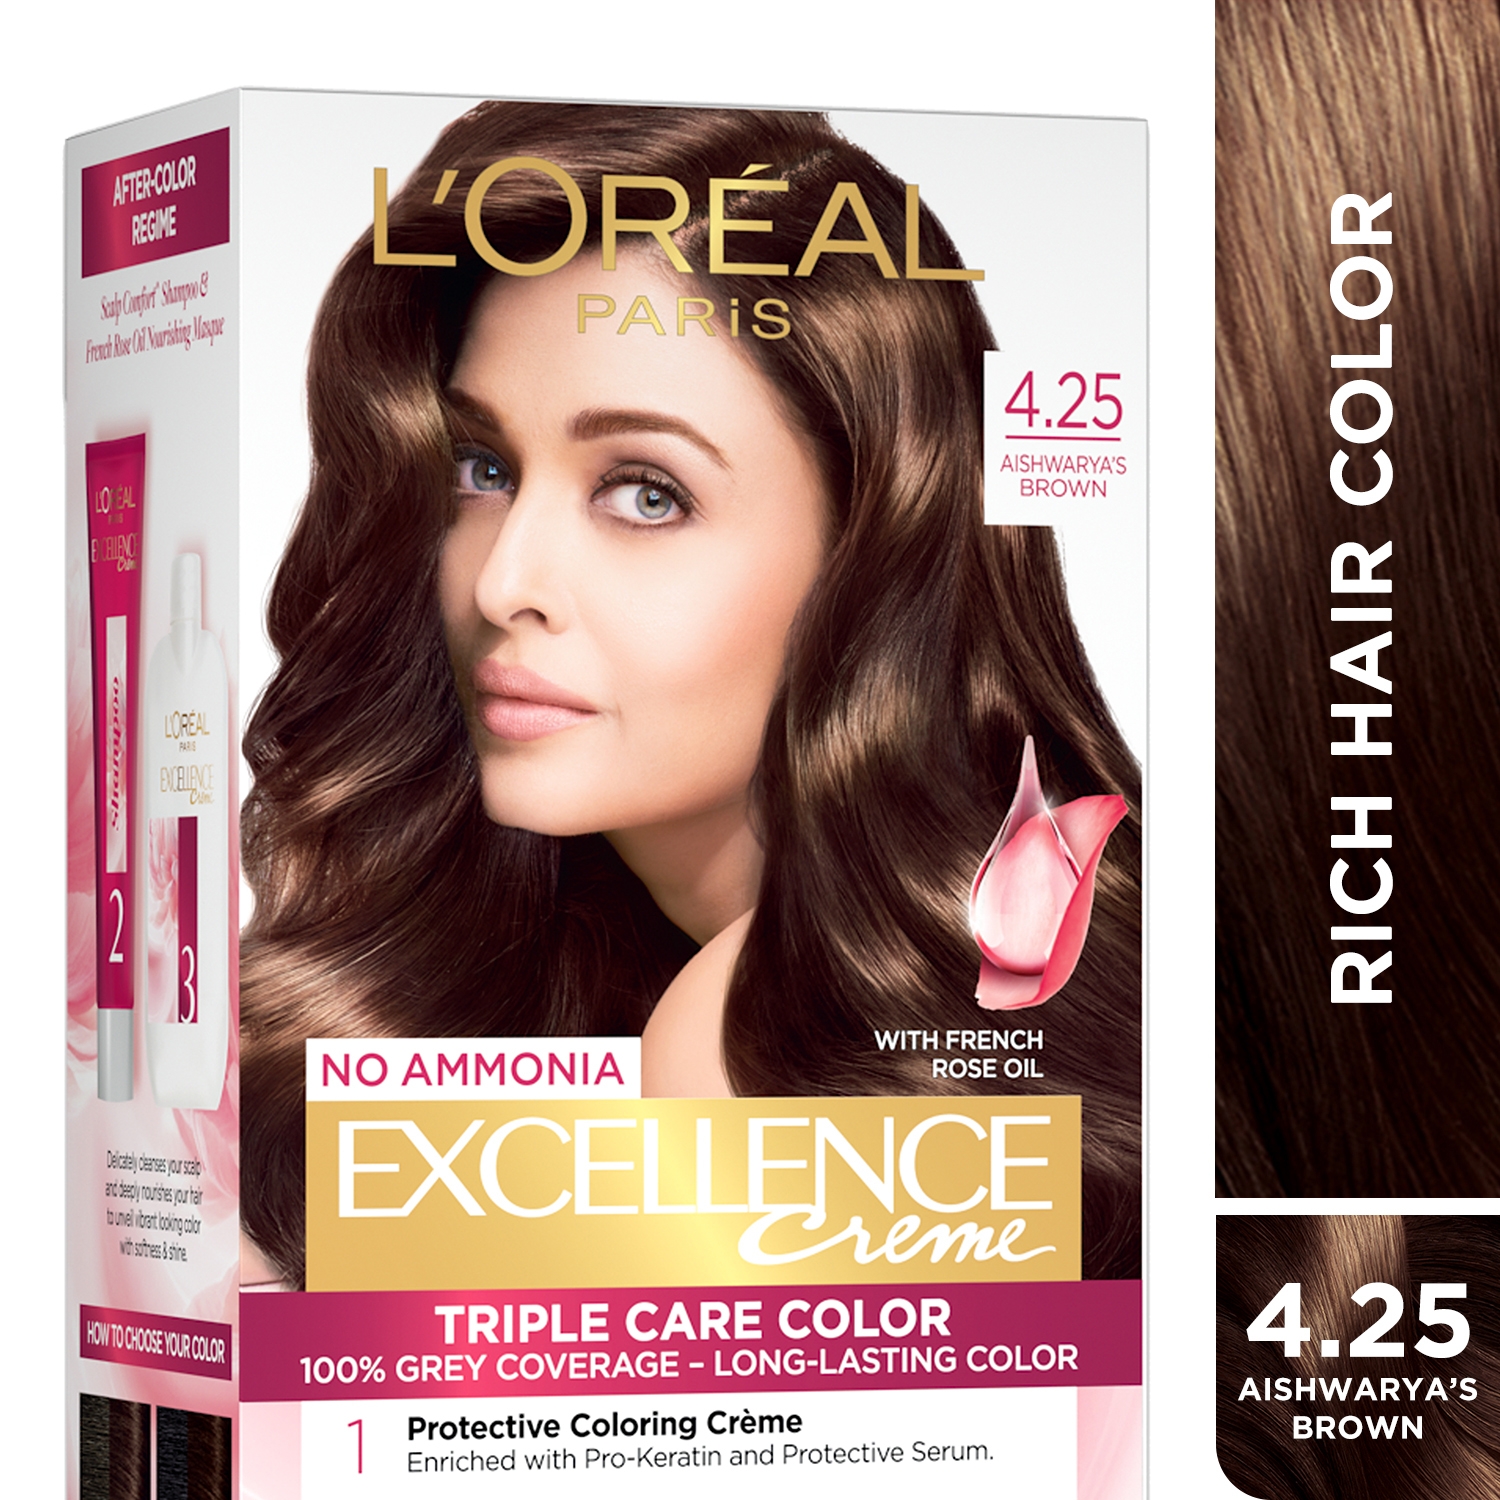 L'Oreal Paris | L'Oreal Paris Excellence Creme Hair Color, 4.25 Aishwarya's Brown, 72ml+100g